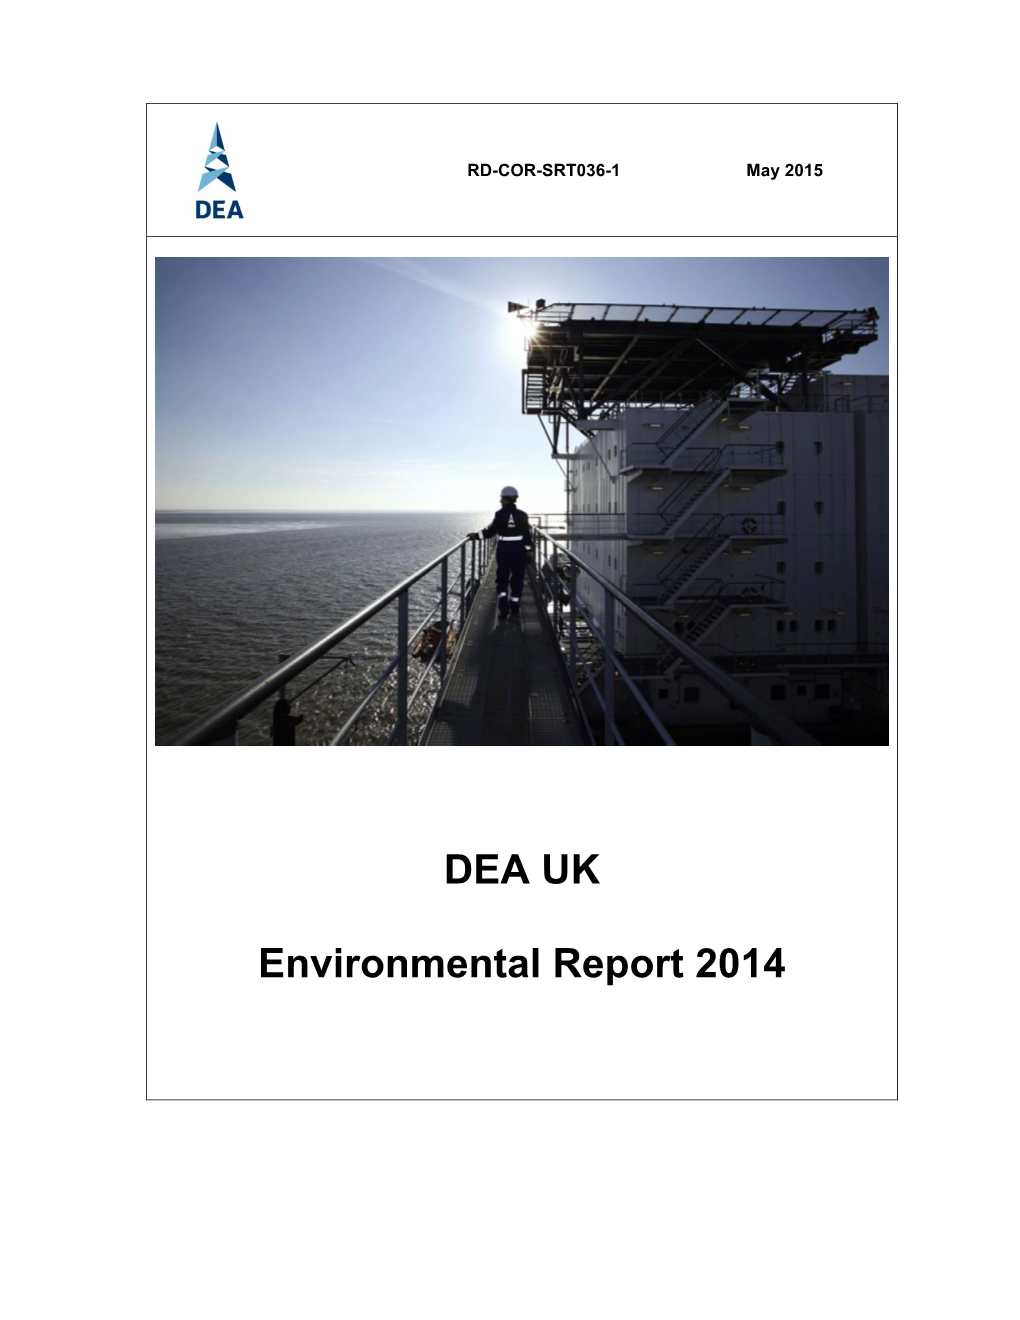 DEA UK Environmental Report 2014